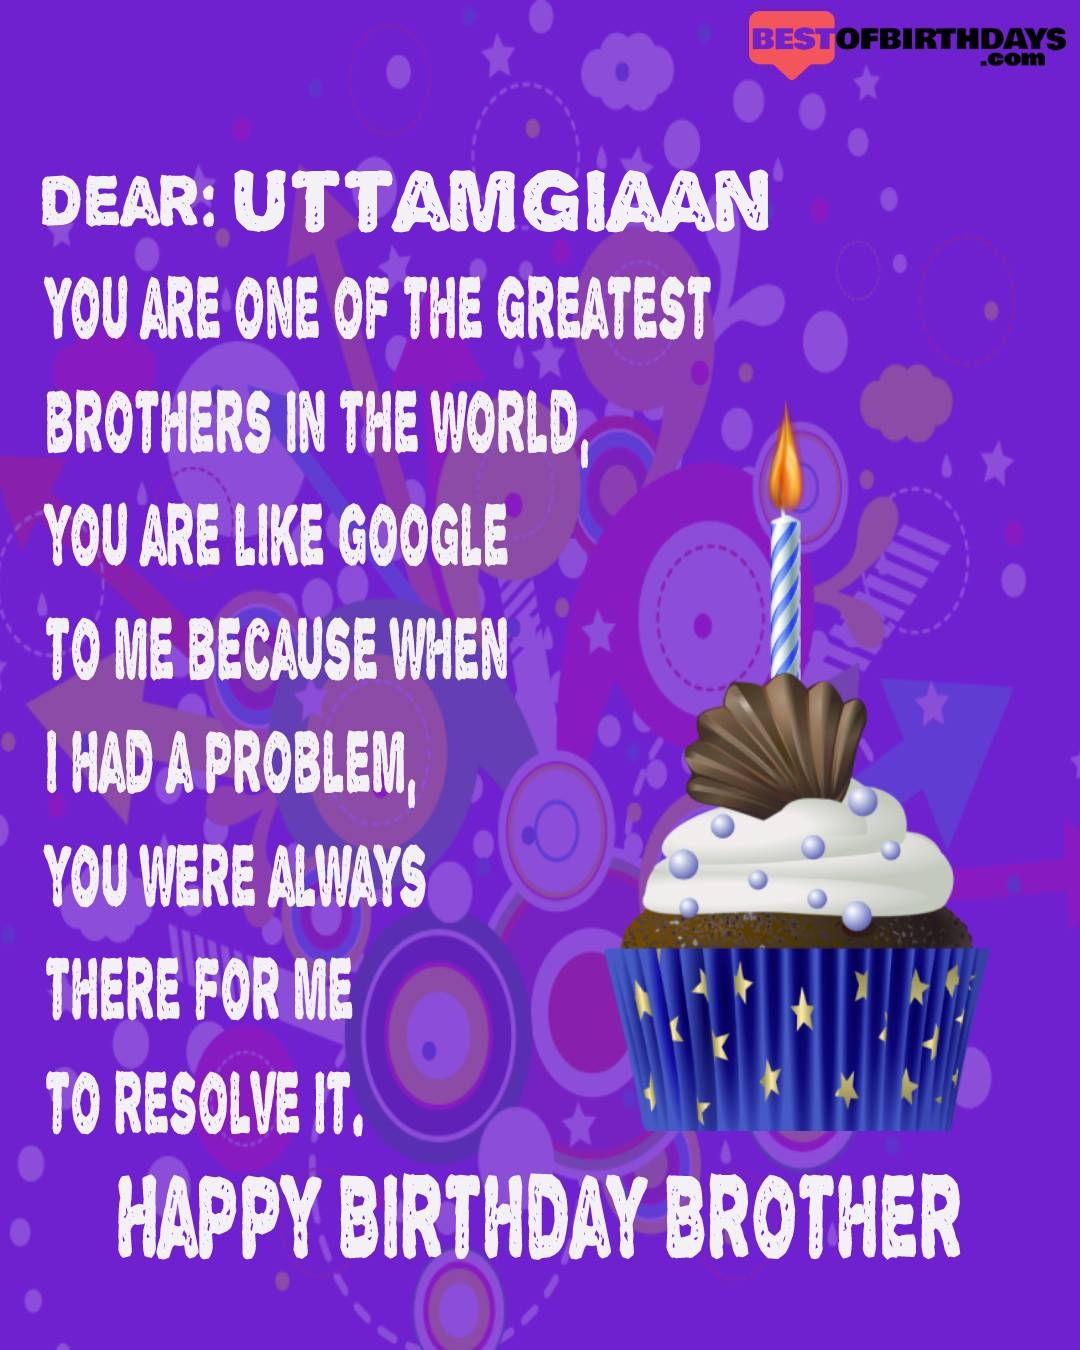 Happy birthday uttamgiaan bhai brother bro